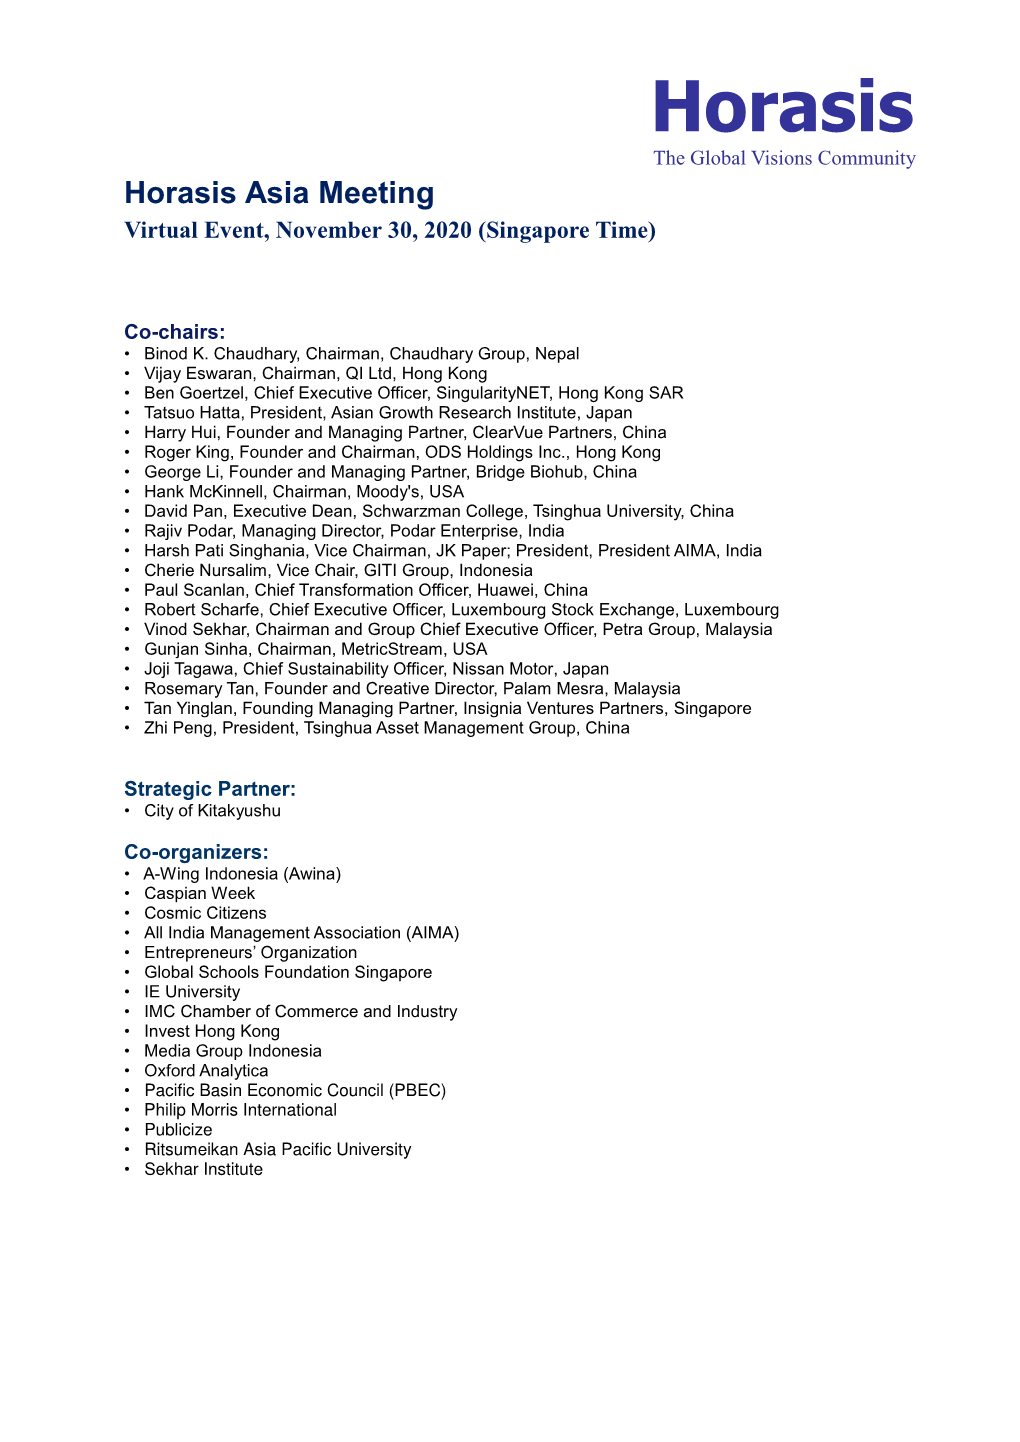 Horasis Asia Meeting Virtual Event, November 30, 2020 (Singapore Time)